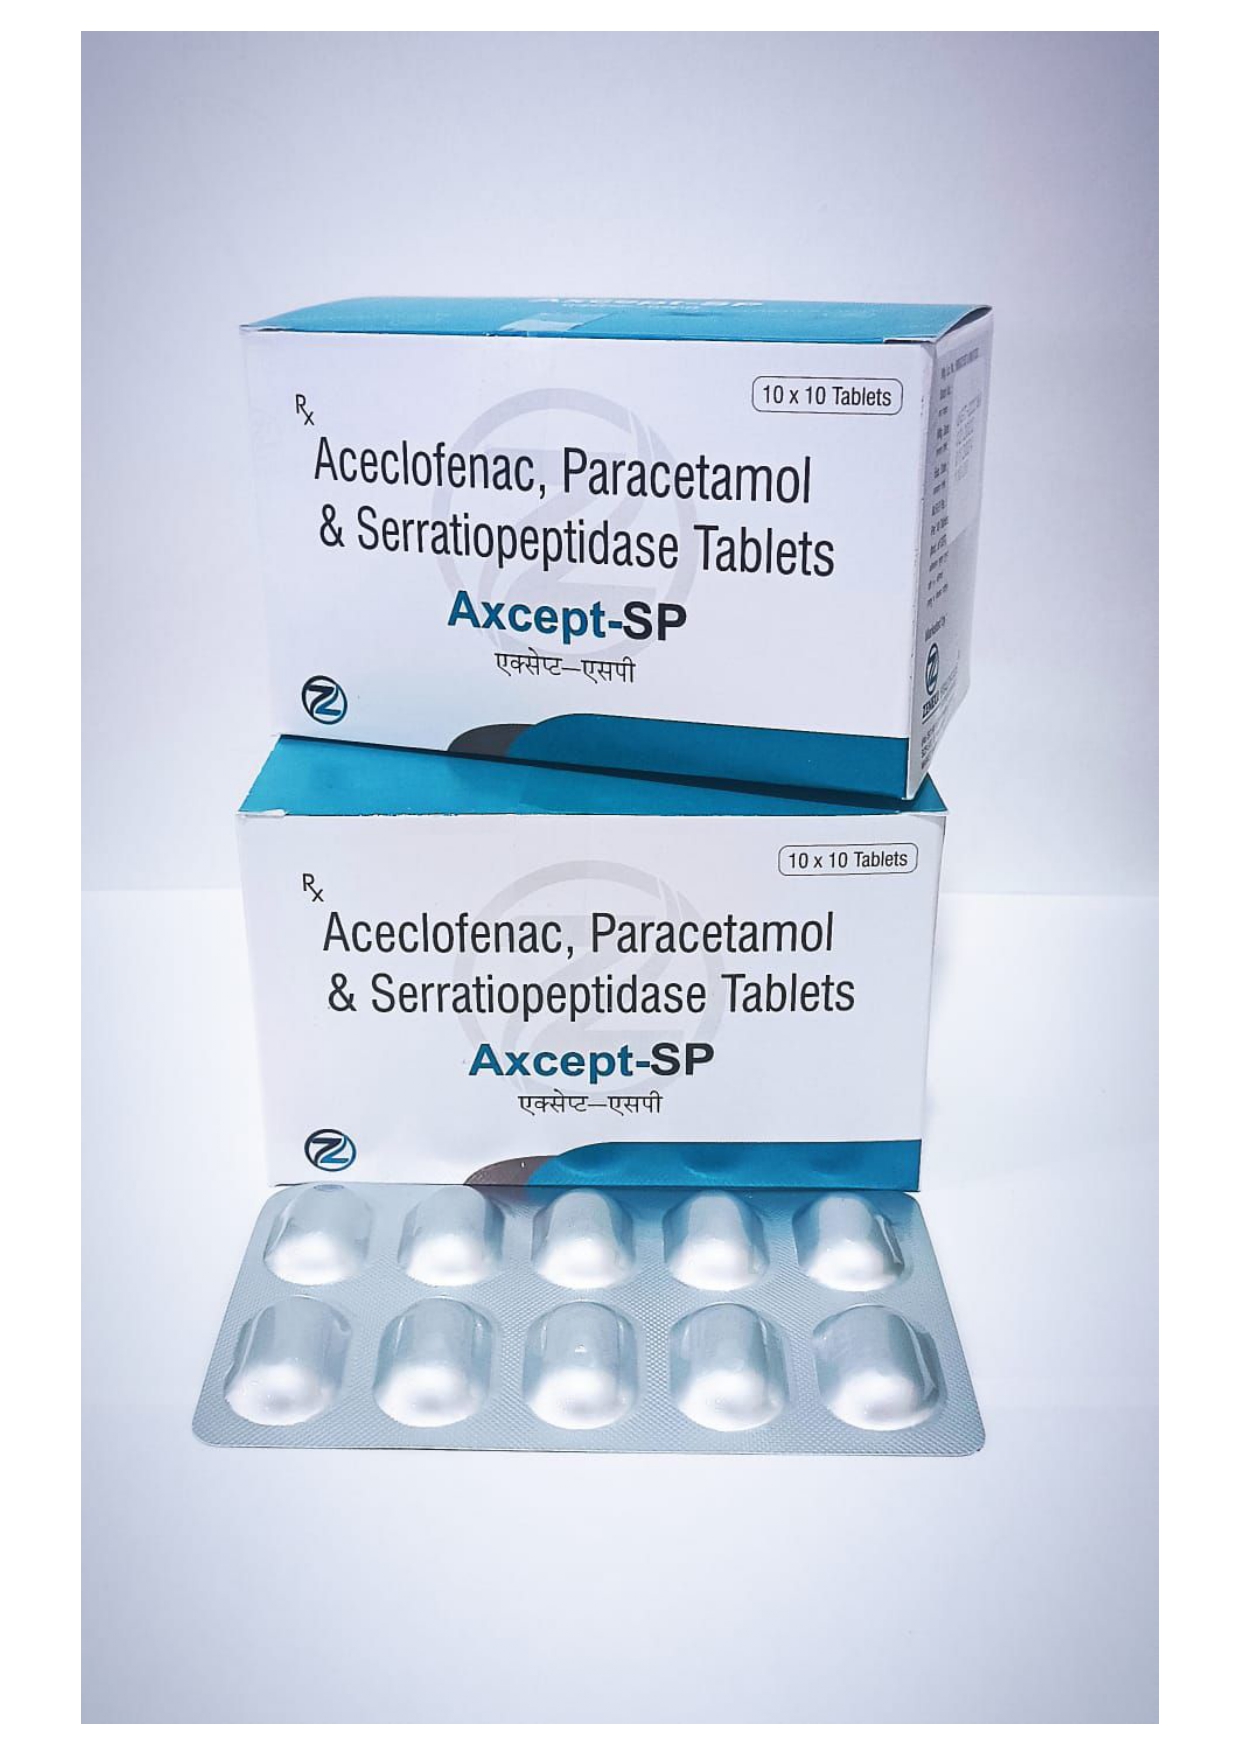 aceclofenac 100mg+ paracetamol 325mg + serratiopeptidase 15mg